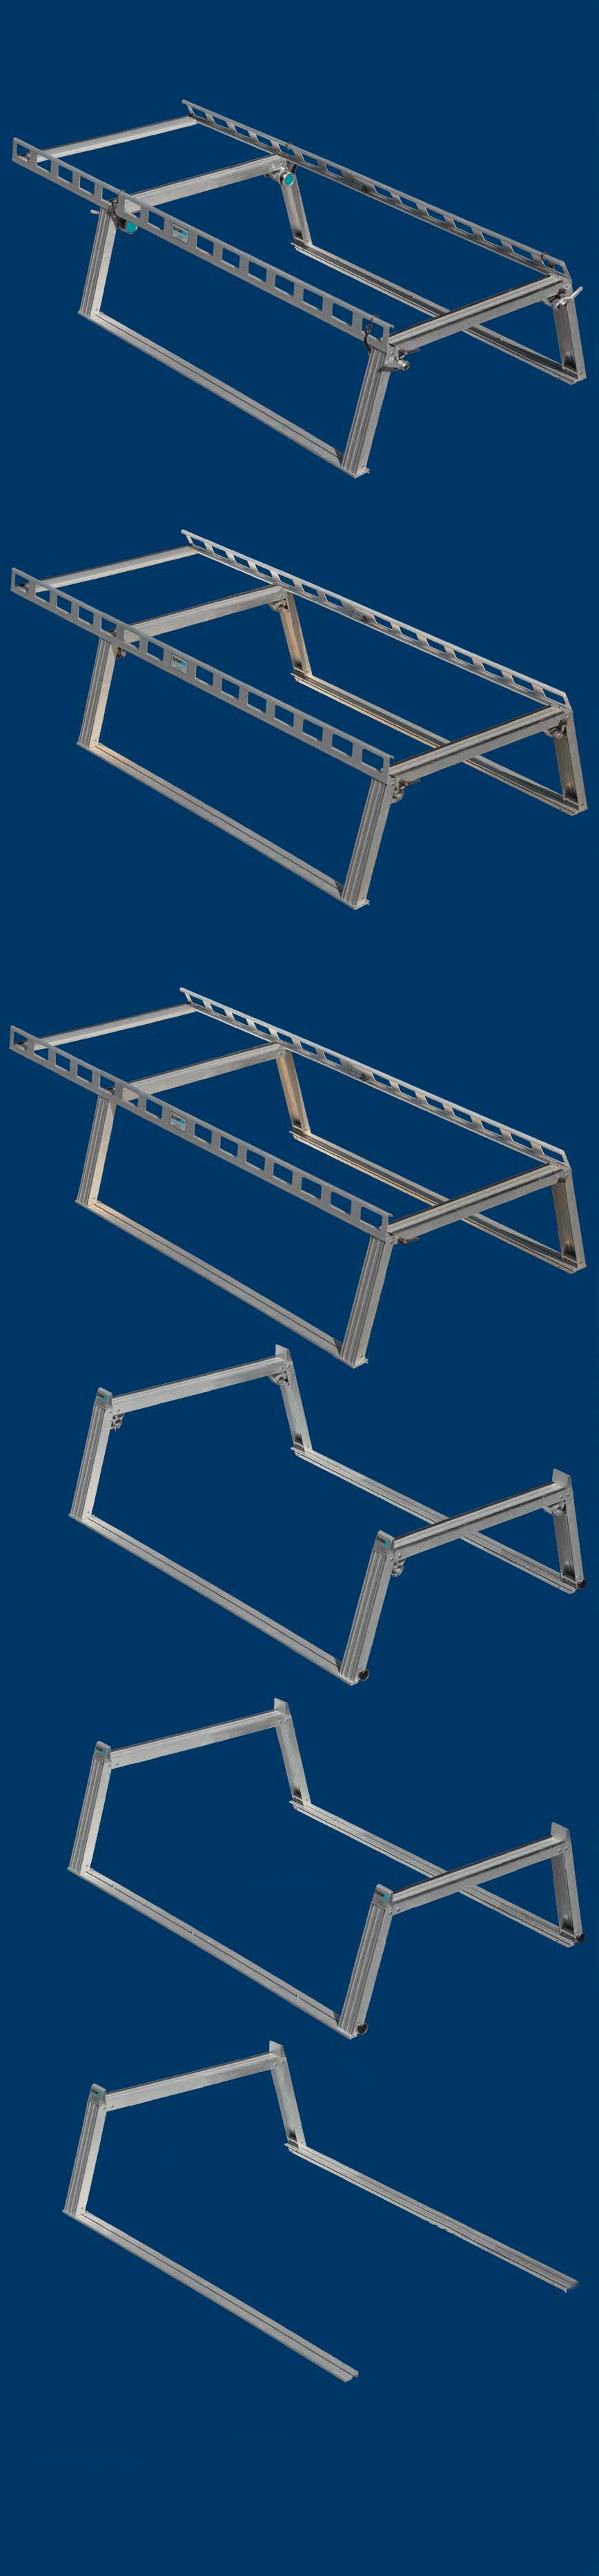 Pick up truck ladder rack overview